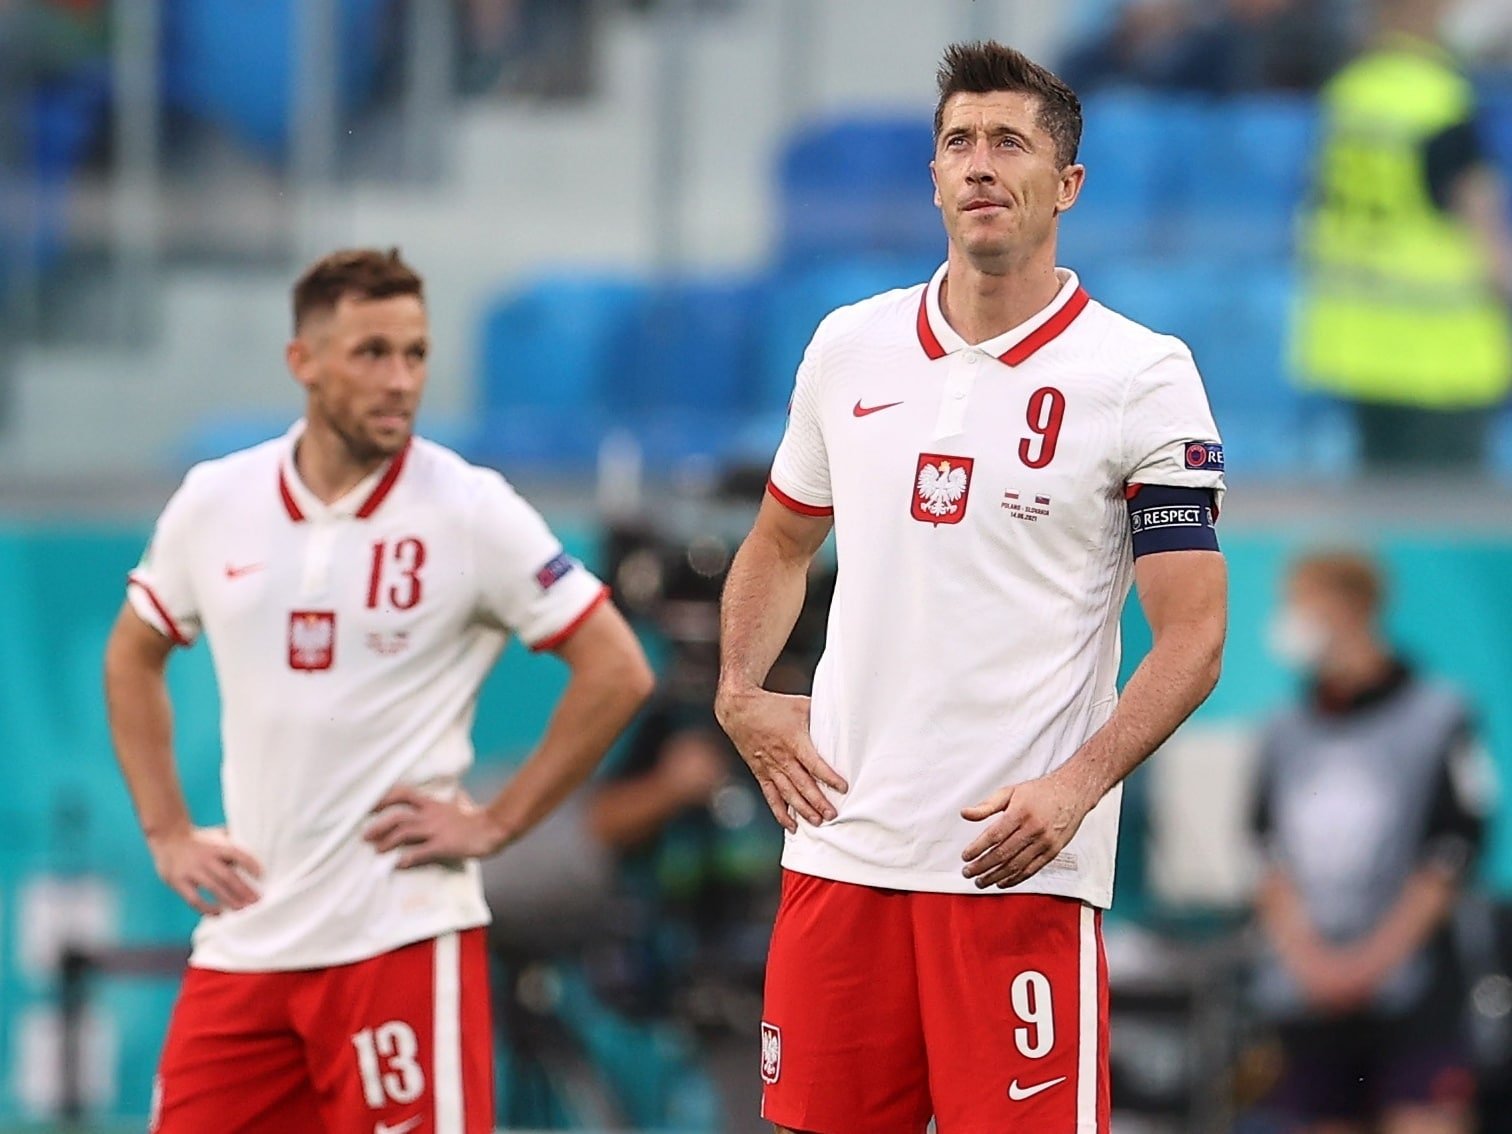 lewandowski lamenta gol marcado por skriniar da eslovaquia durante estreia na eurocopa pela polonia